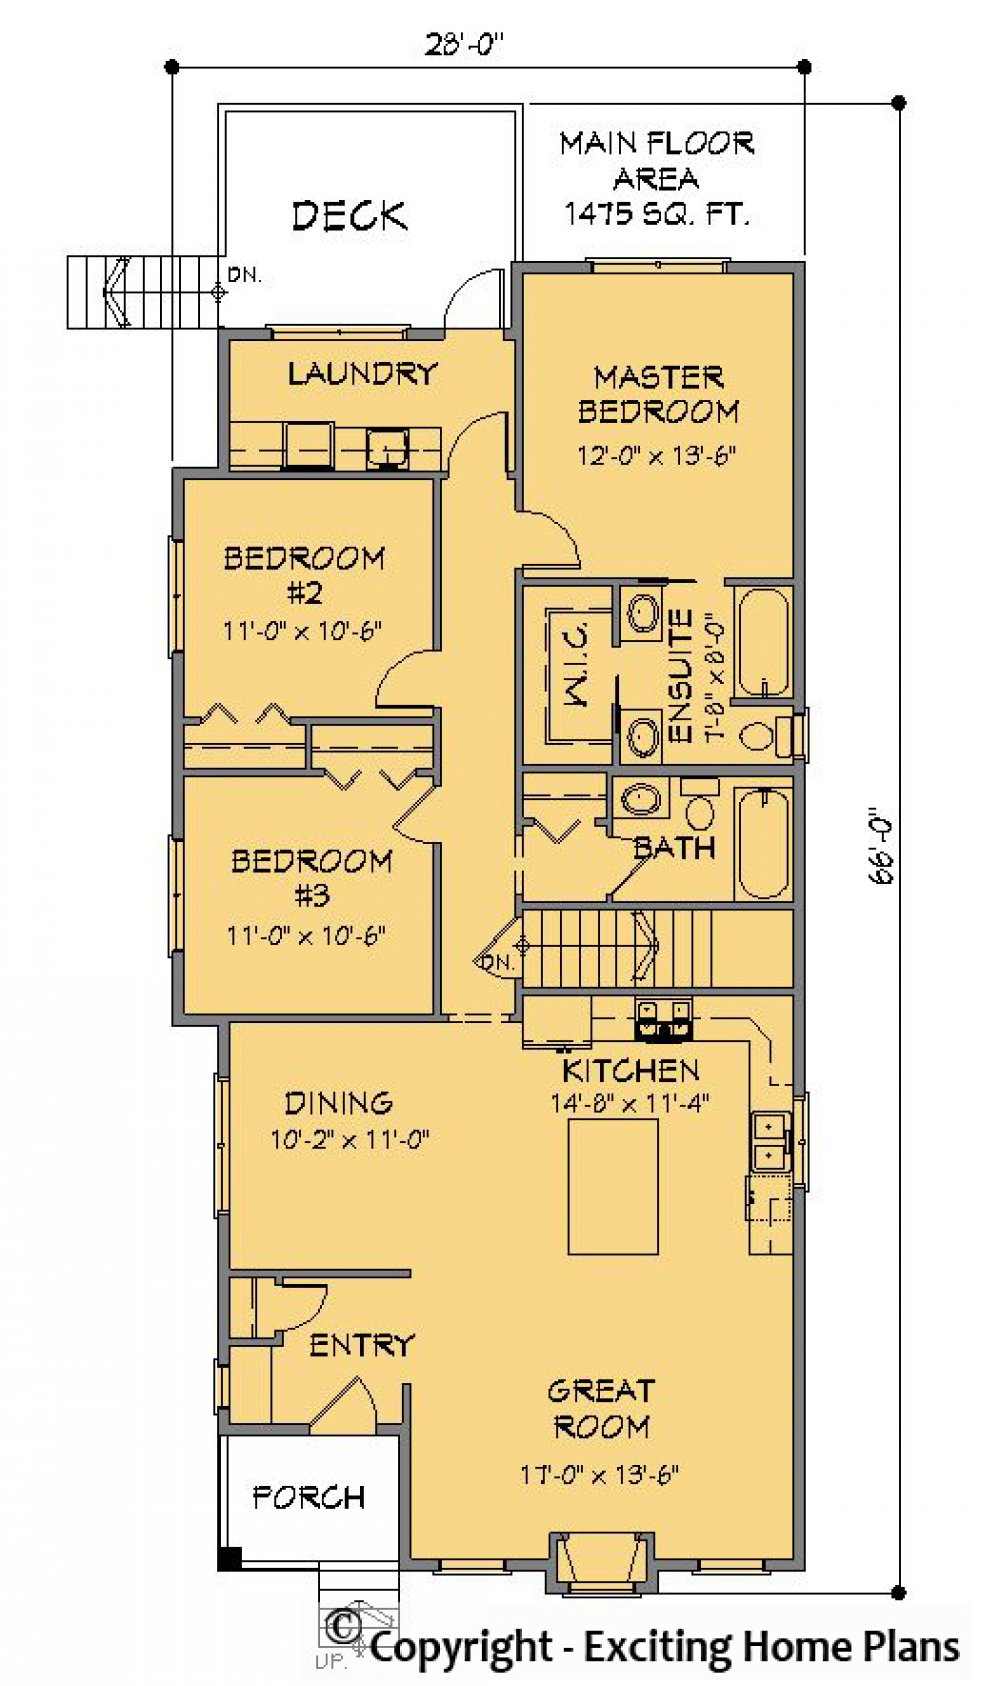 House Plan E1565-10  Main Floor Plan